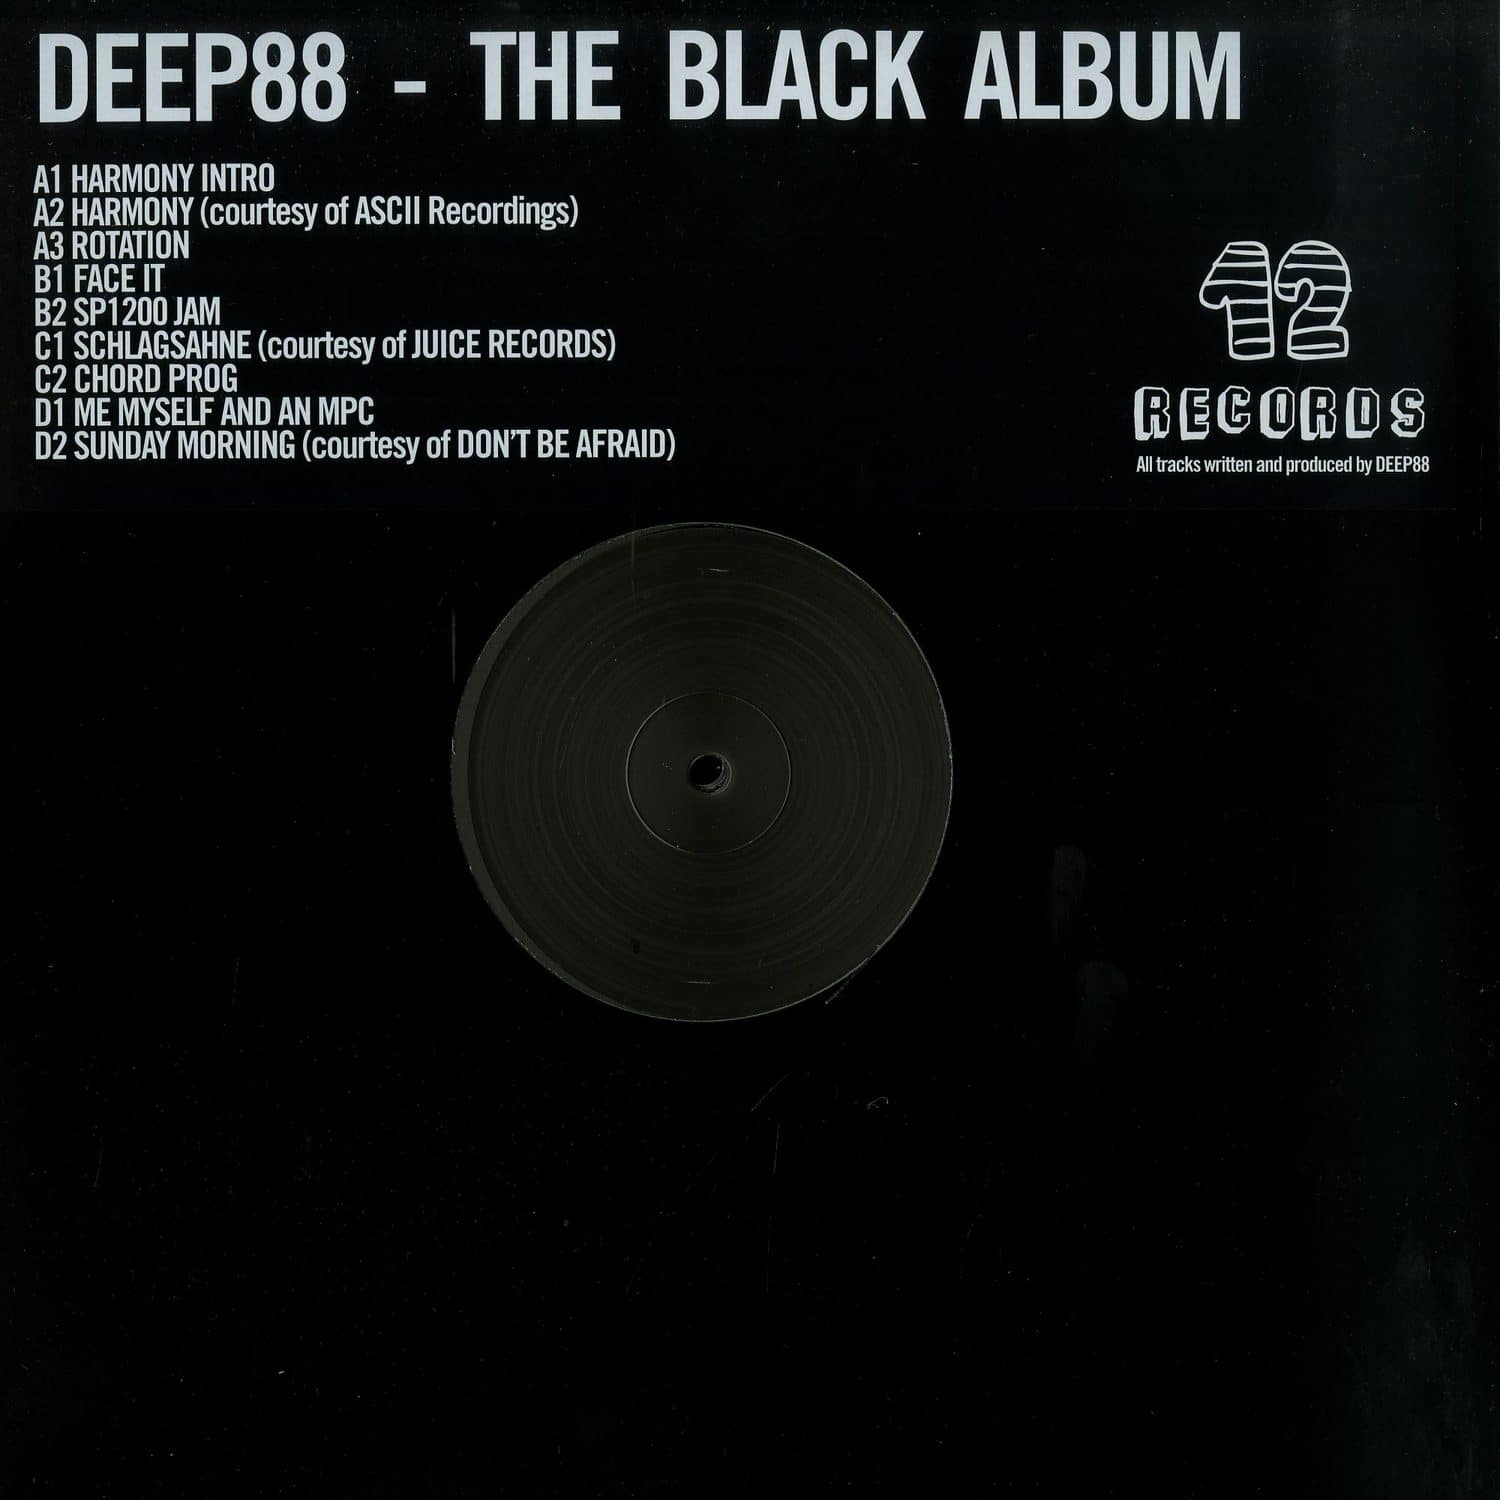 Deep88 - THE BLACK ALBUM 